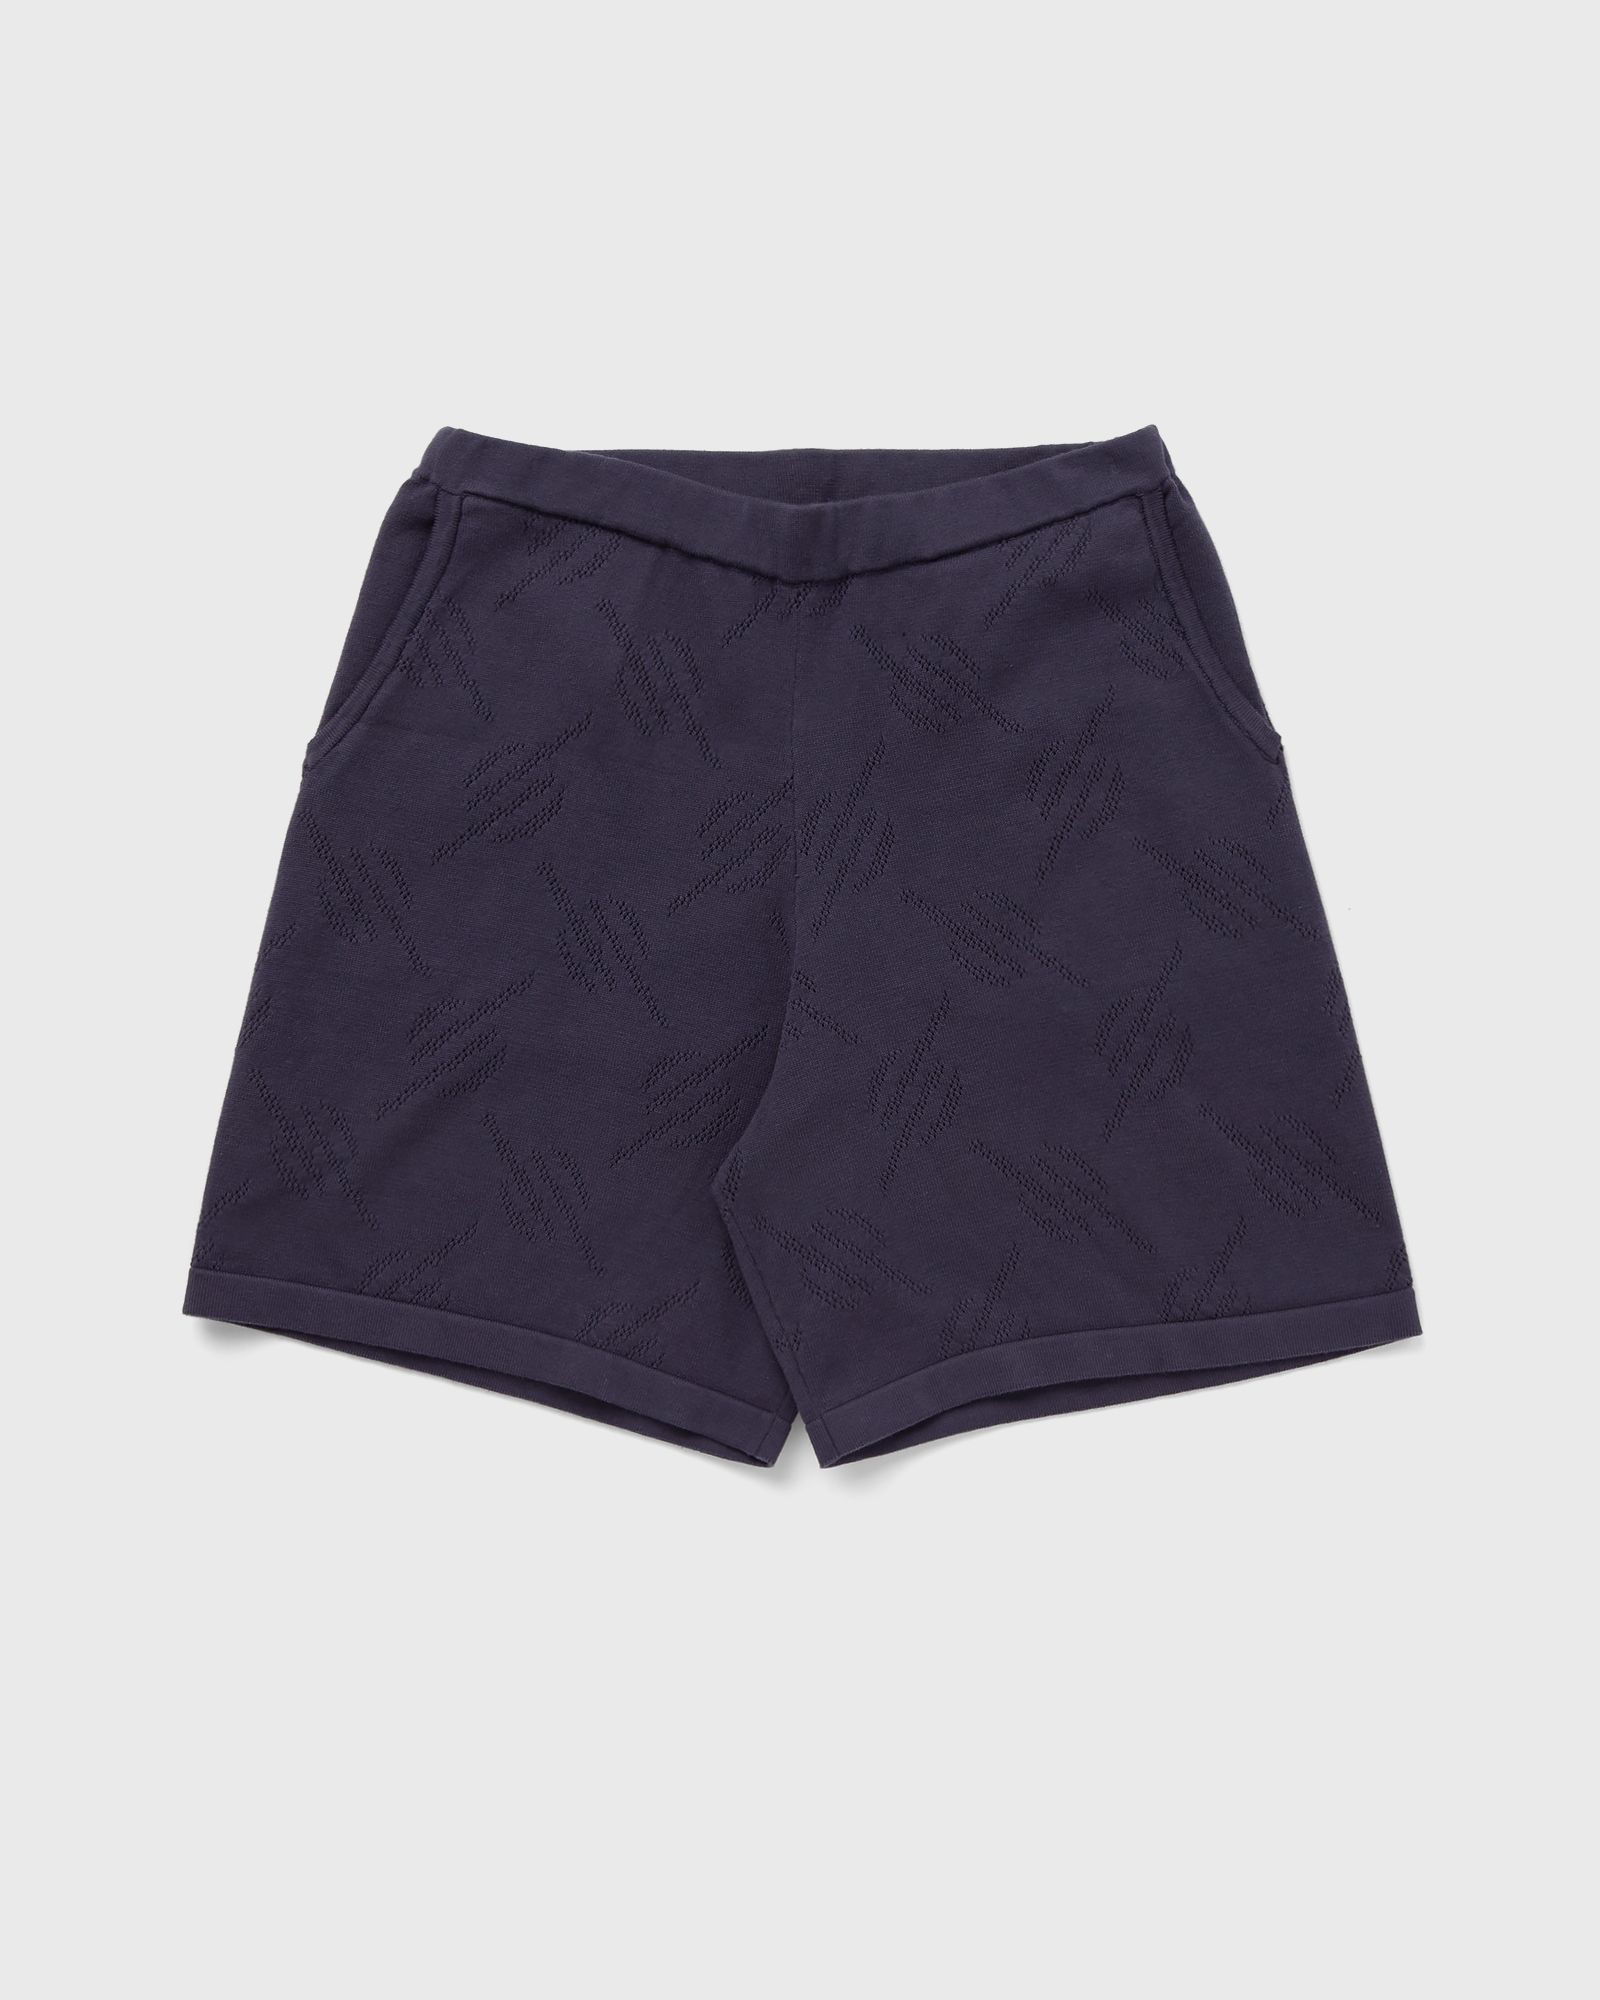 Daily Paper - ralo shorts men sport & team shorts purple in größe:xl